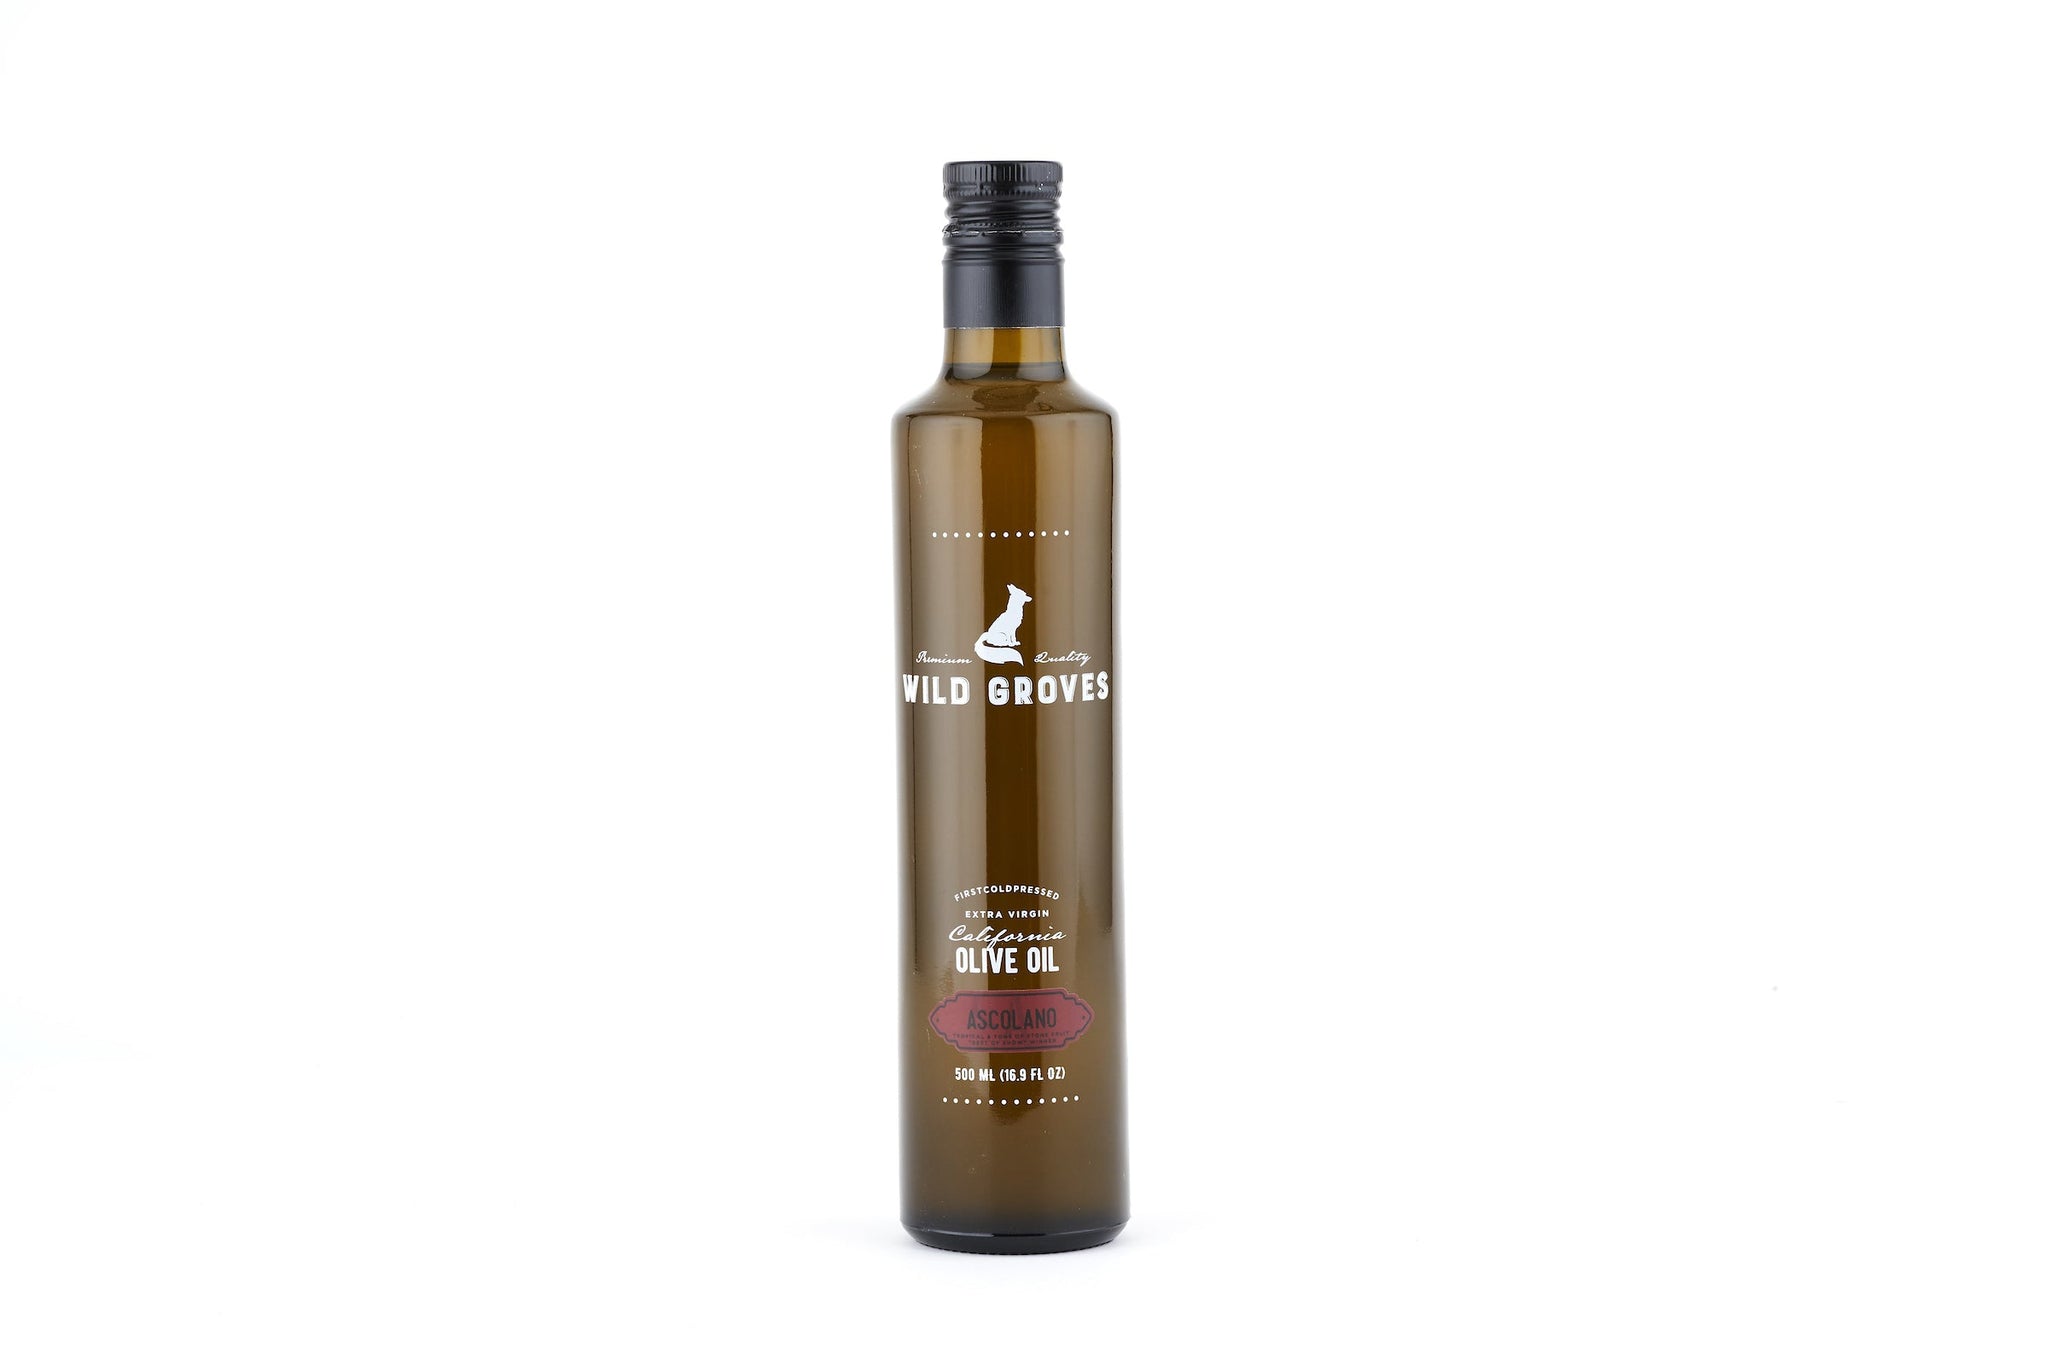 Ascolano Extra Virgin Olive Oil (2022)